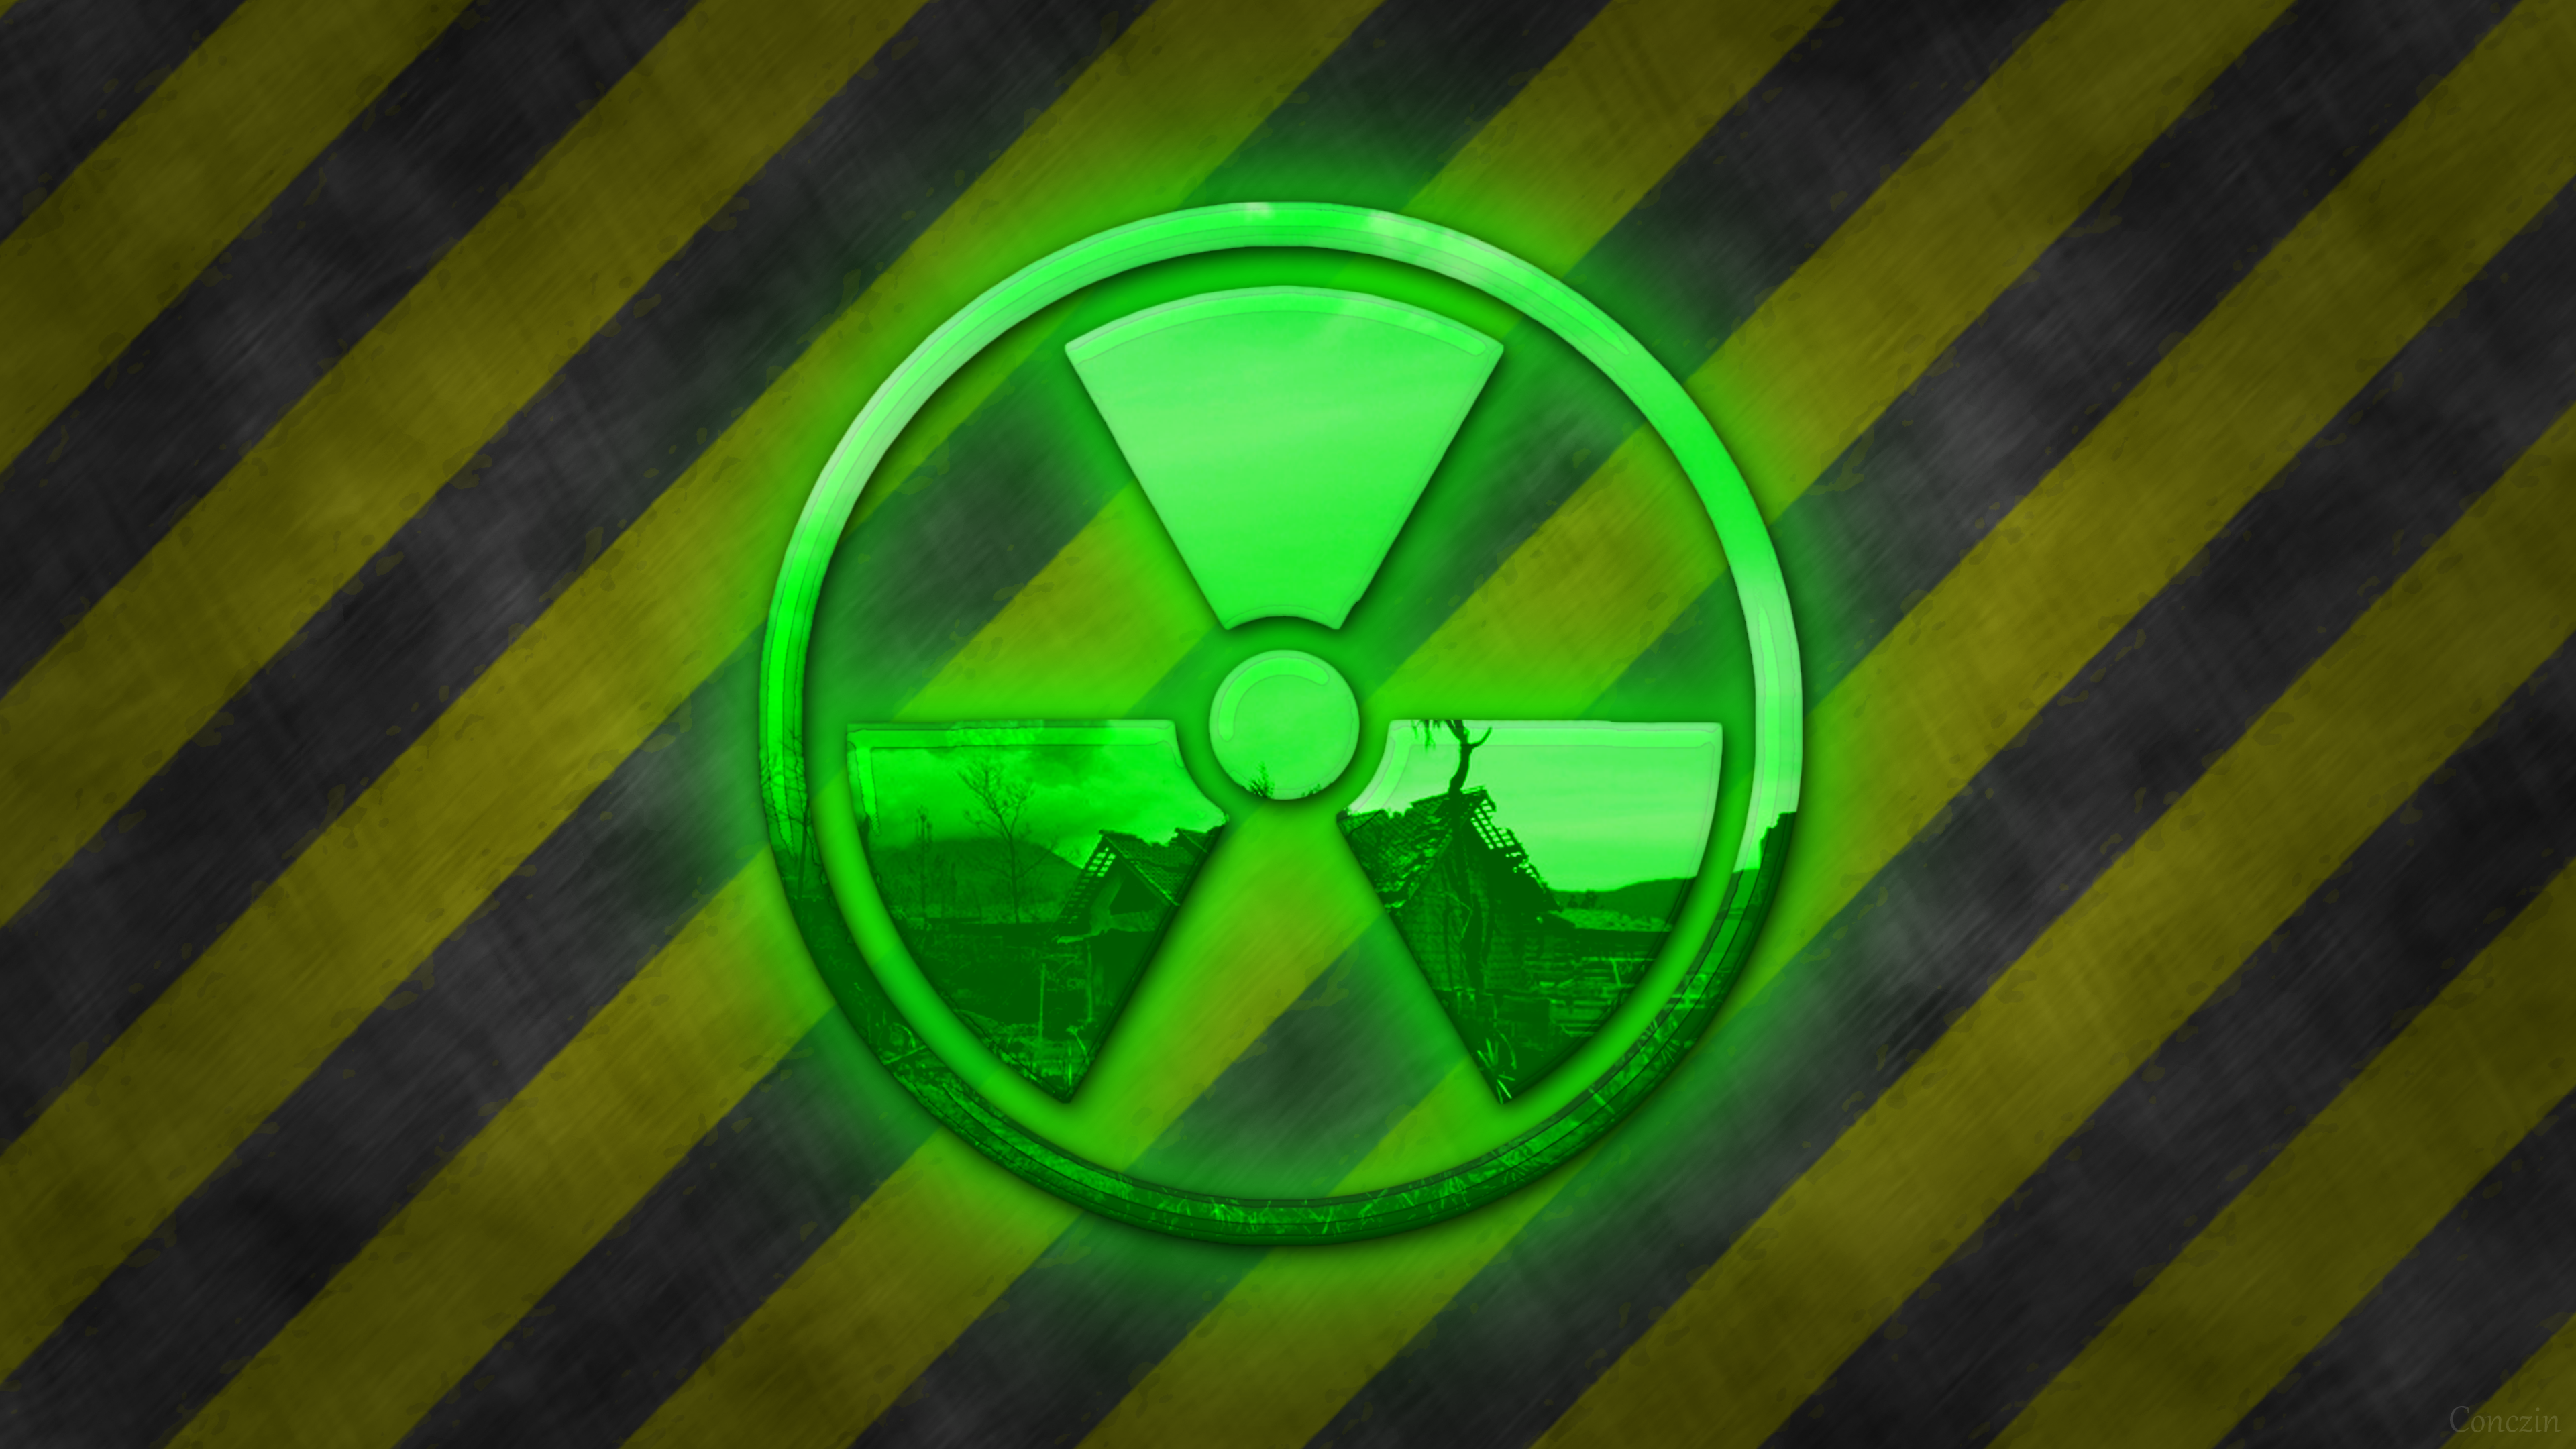 Radioactive Metal by Luke100000